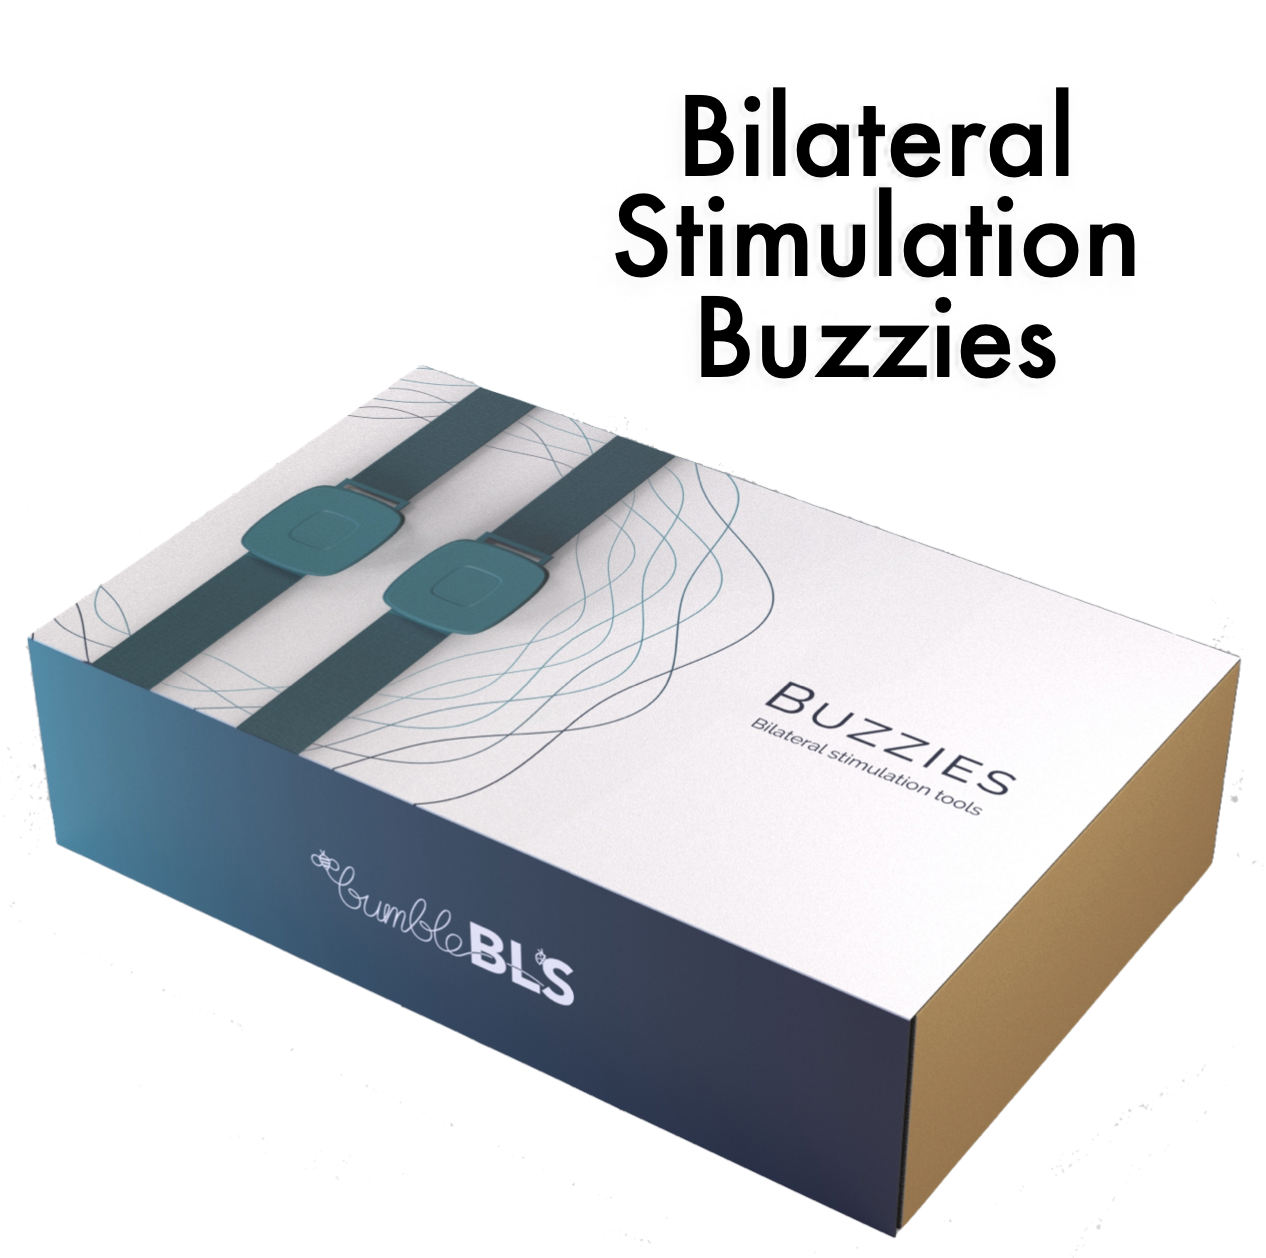 Bumble BLS Buzzies packaging render